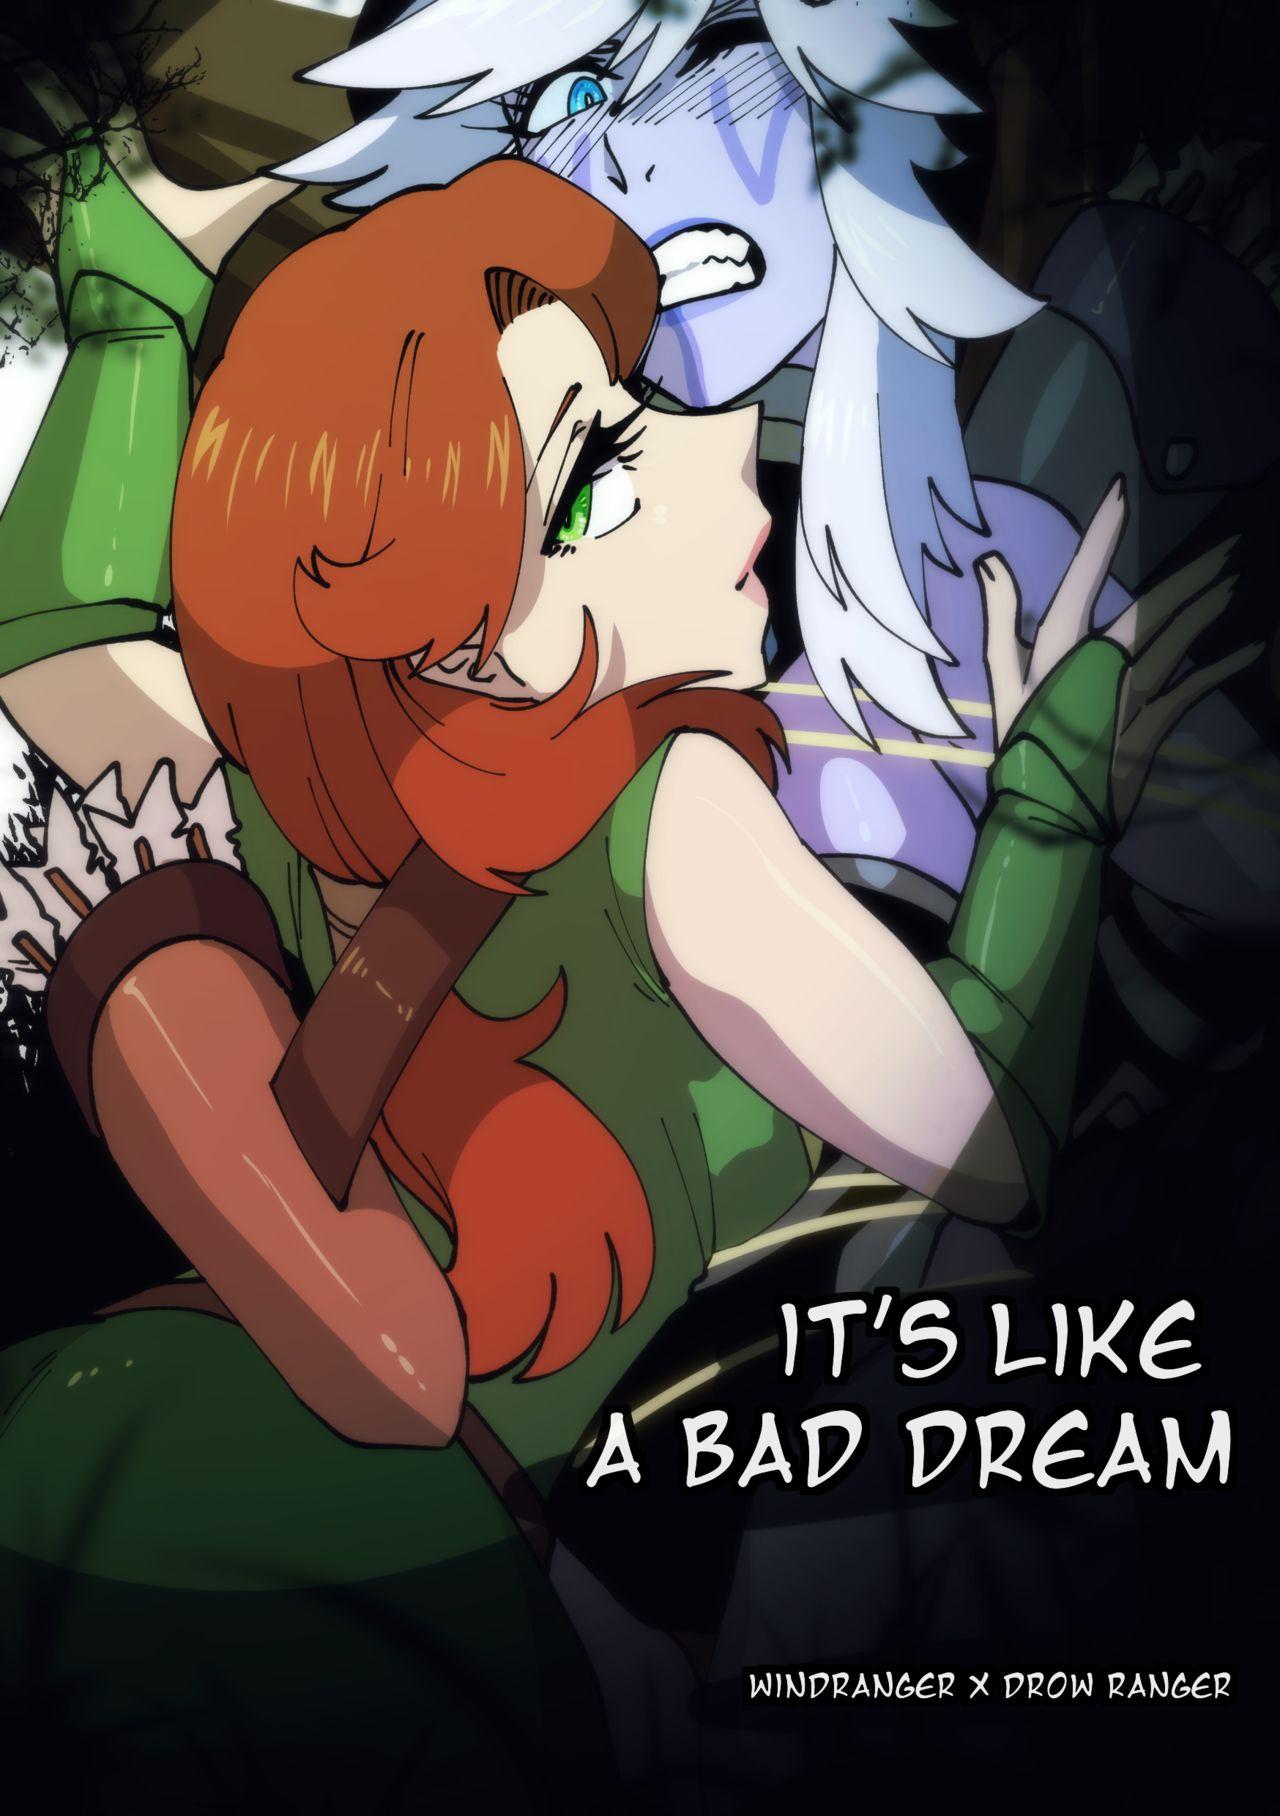 "It's Like A Bad Dream" Windranger x Drow Ranger comic by Riko 1